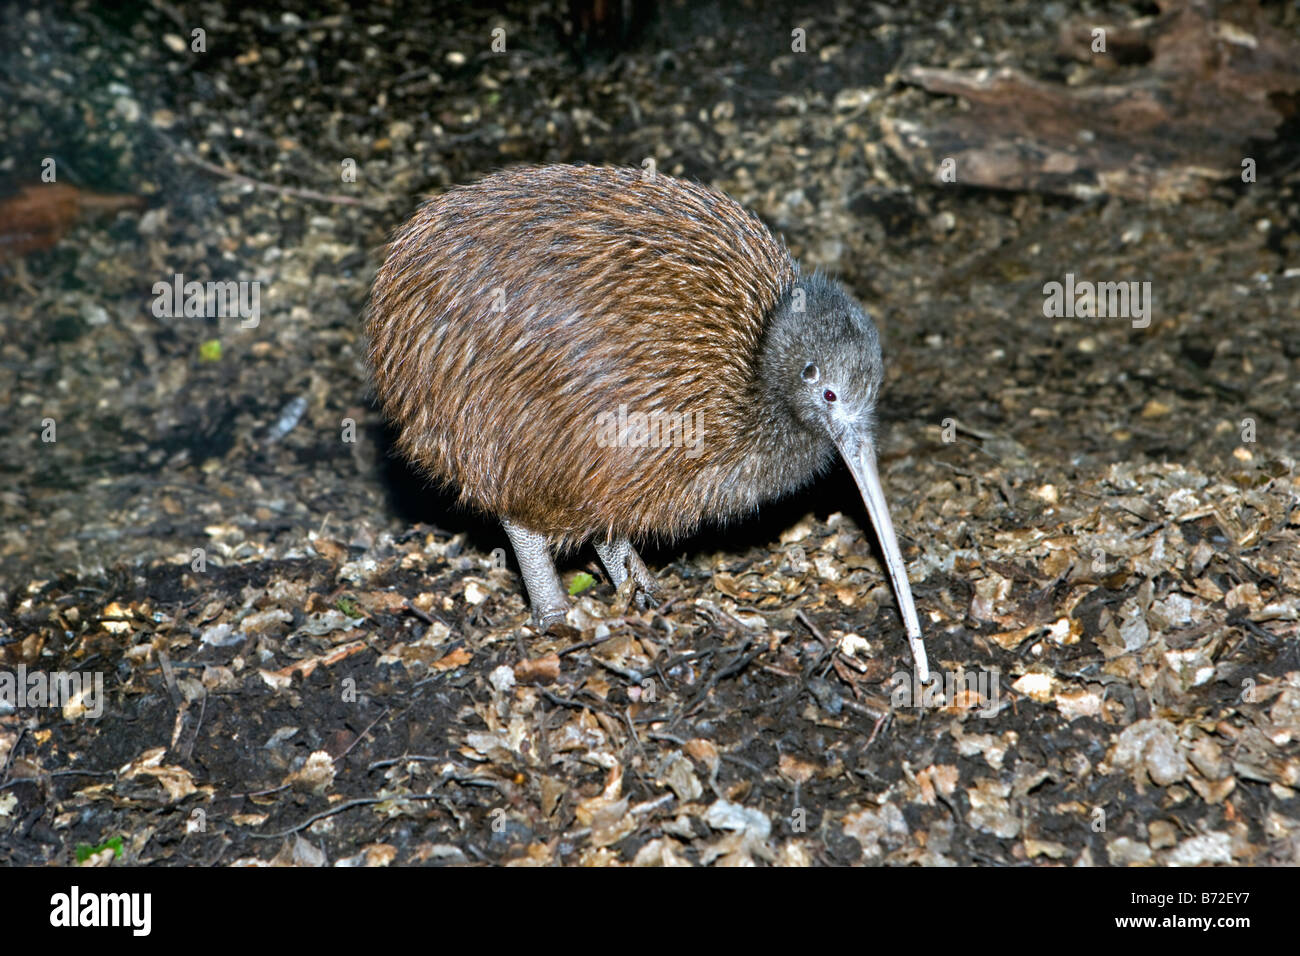 New Zealand, South Island, Queenstown, Kiwi, Apteryx australis. Stock Photo